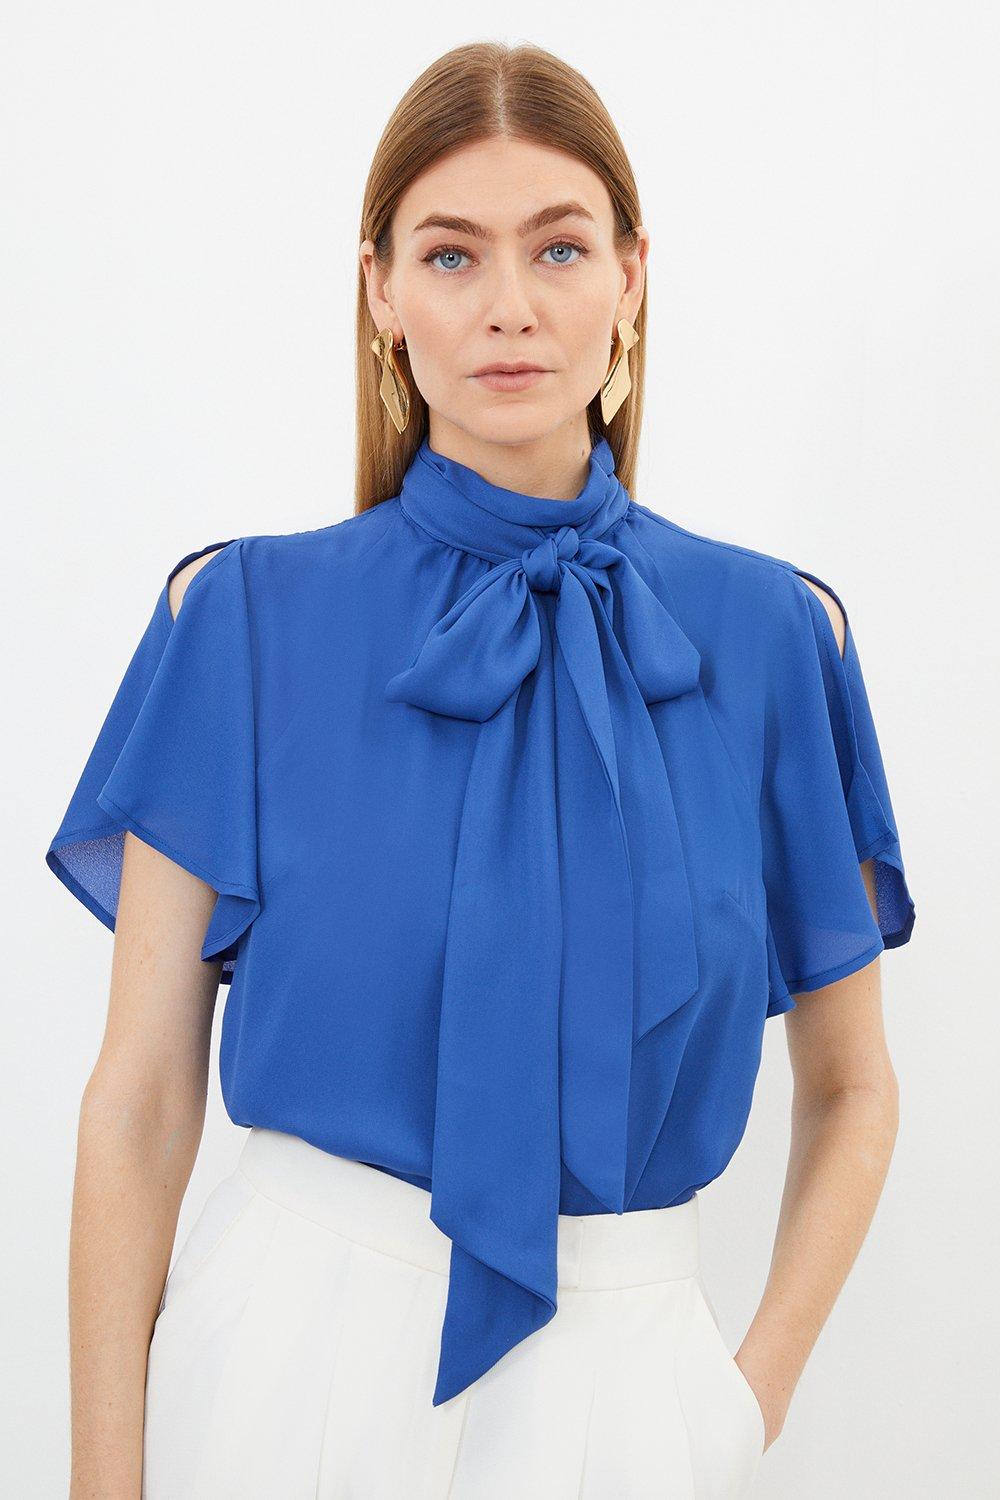 цена Тканая блузка с рюшами и завязками на шее Georgette Karen Millen, синий